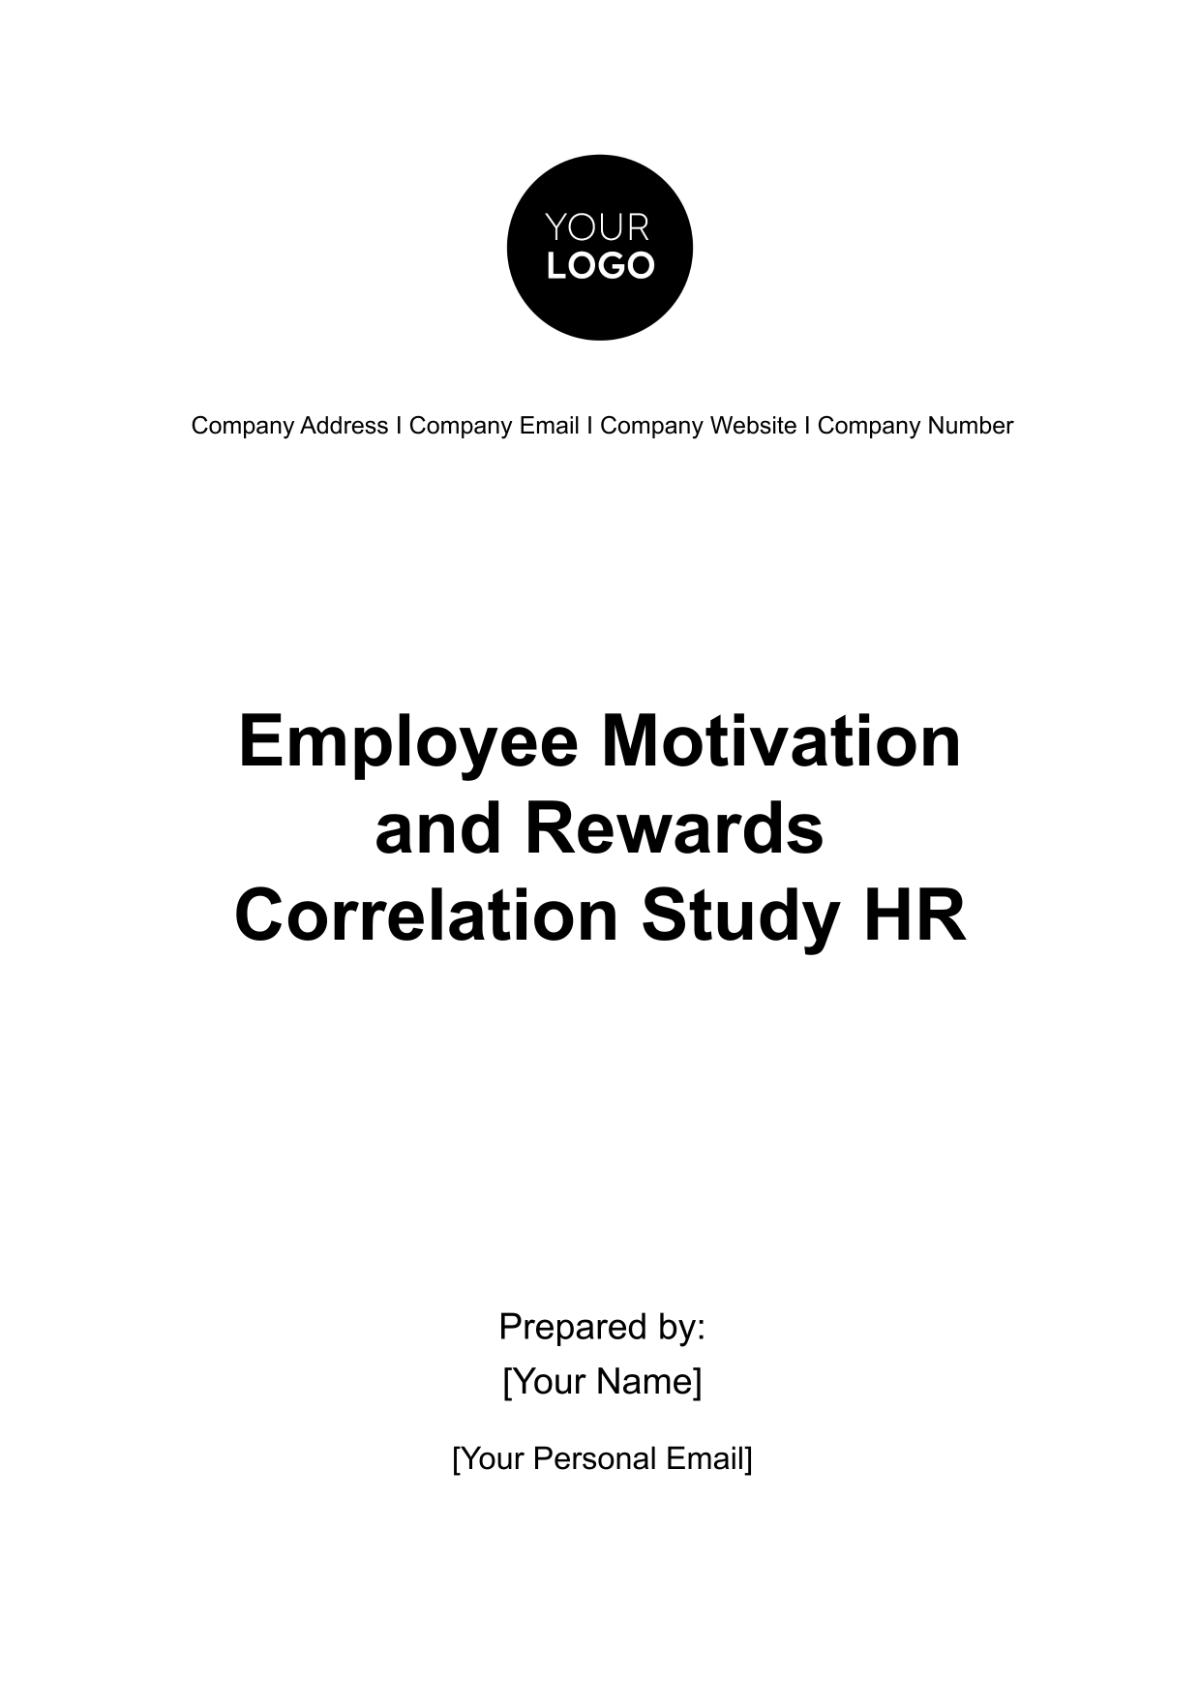 Free Employee Motivation and Rewards Correlation Study HR Template